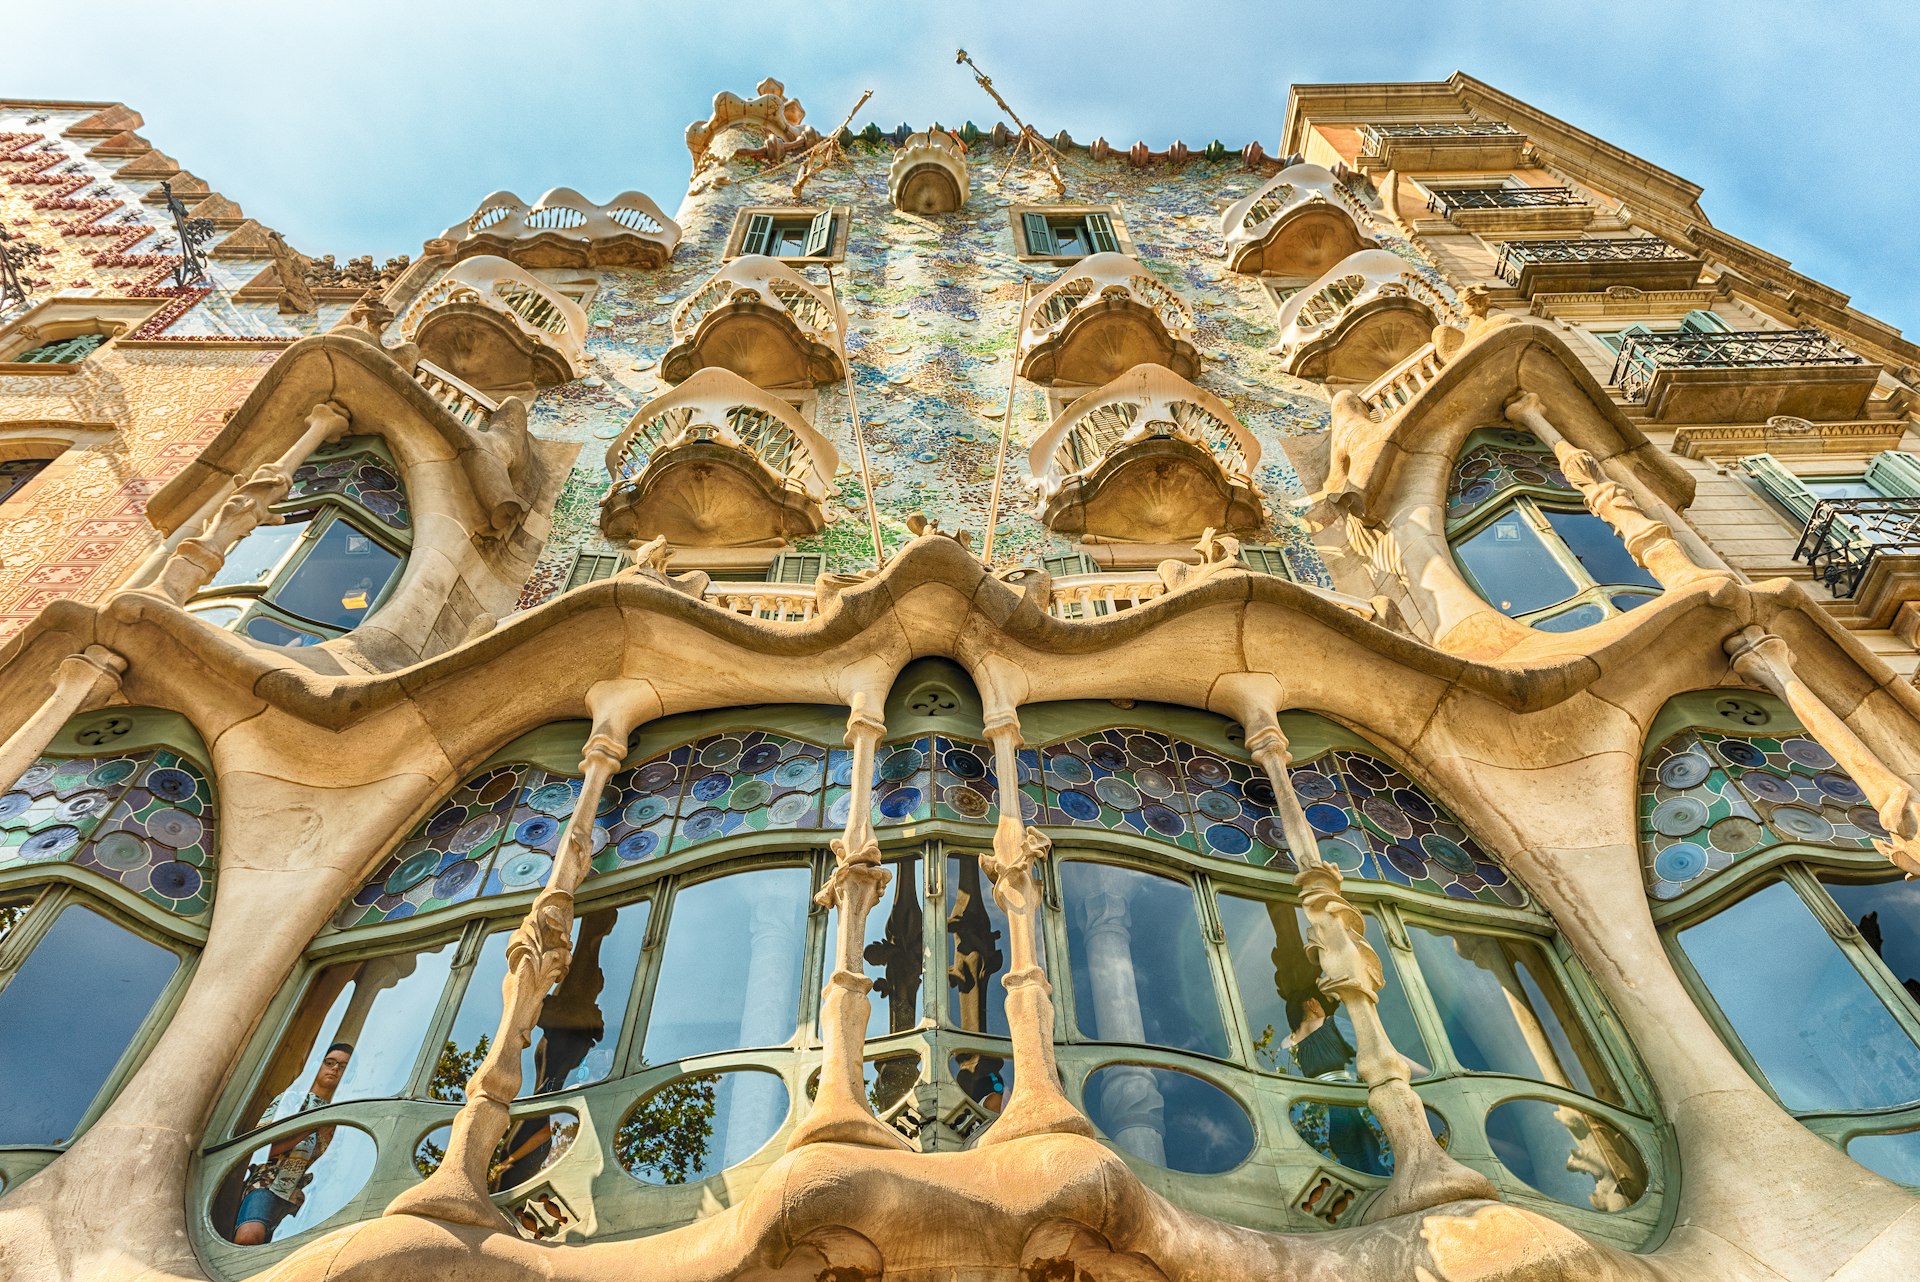 Facade of the modernist masterpiece Casa Batlló, a renowned building designed by Antoni Gaudí, Barcelona, Catalonia, Spain